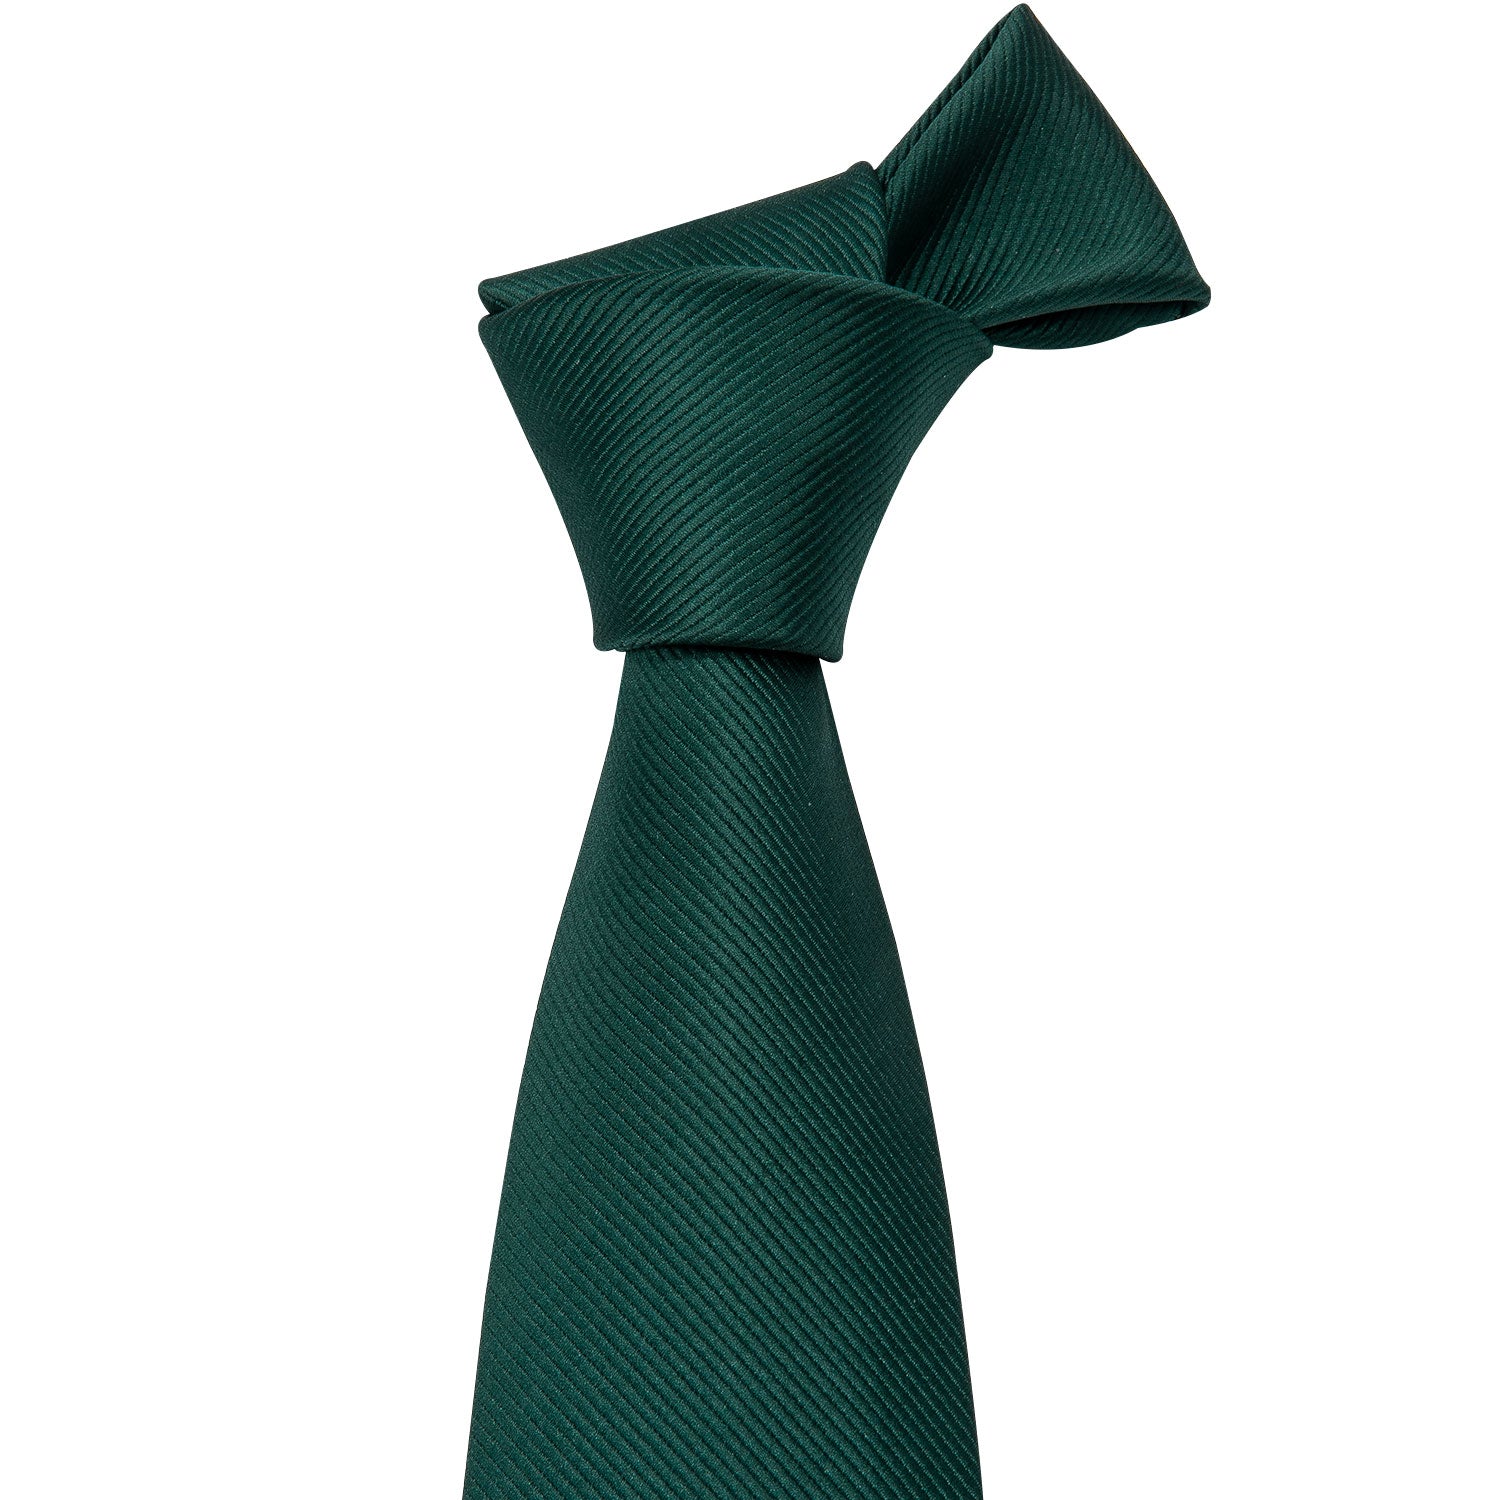 Barry.wang Green Tie Solid Men's Silk Tie Pocket Square Cufflinks Set